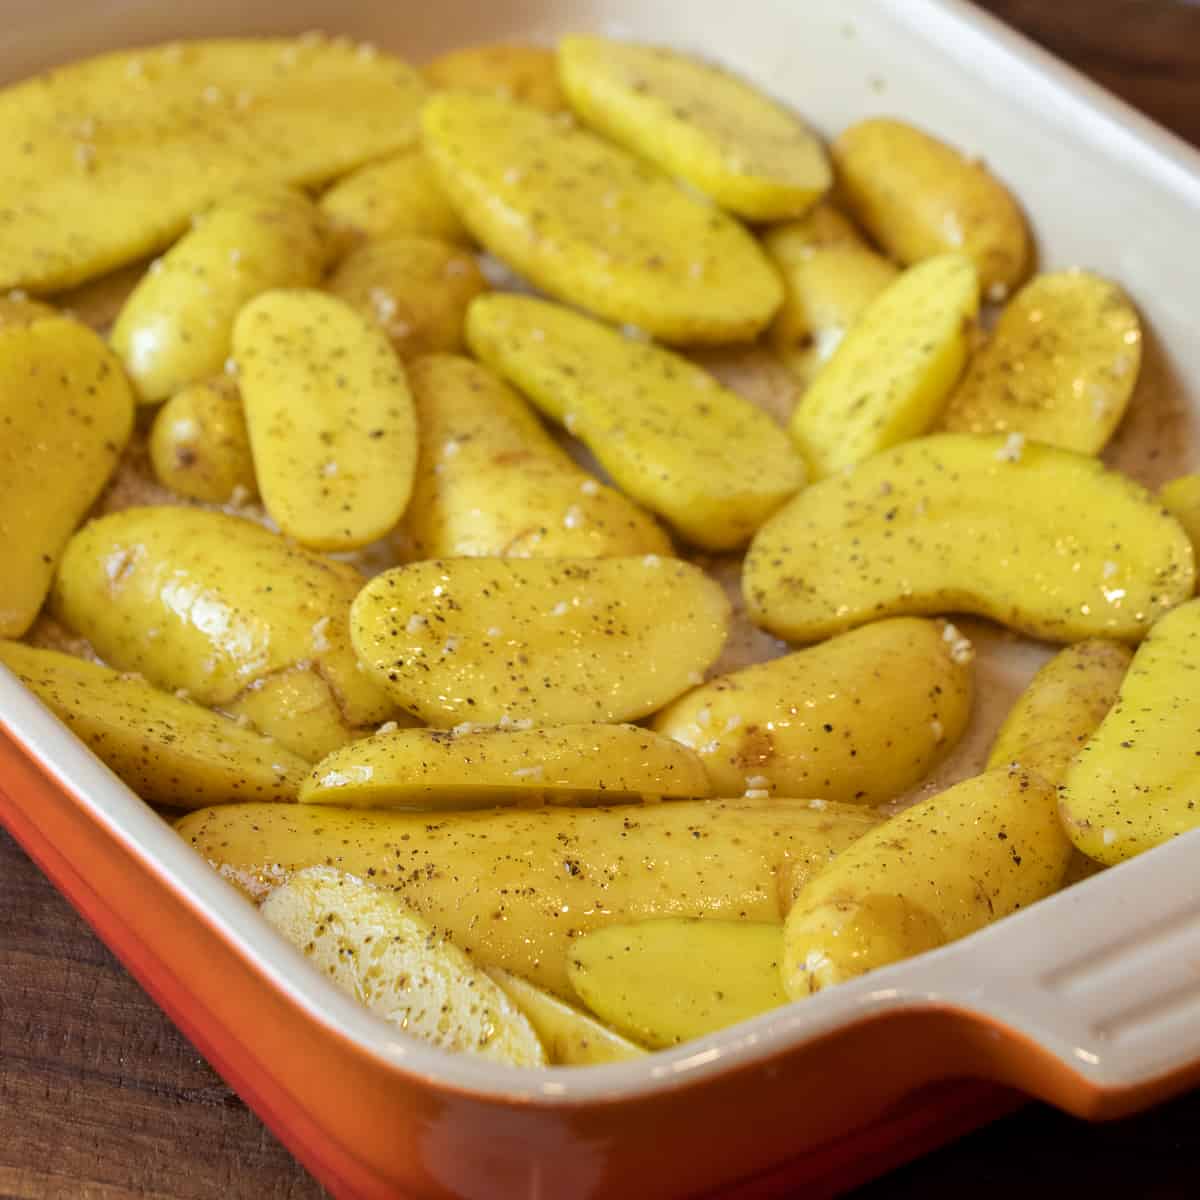 Raw potatoes tossed in oil and seasonings.